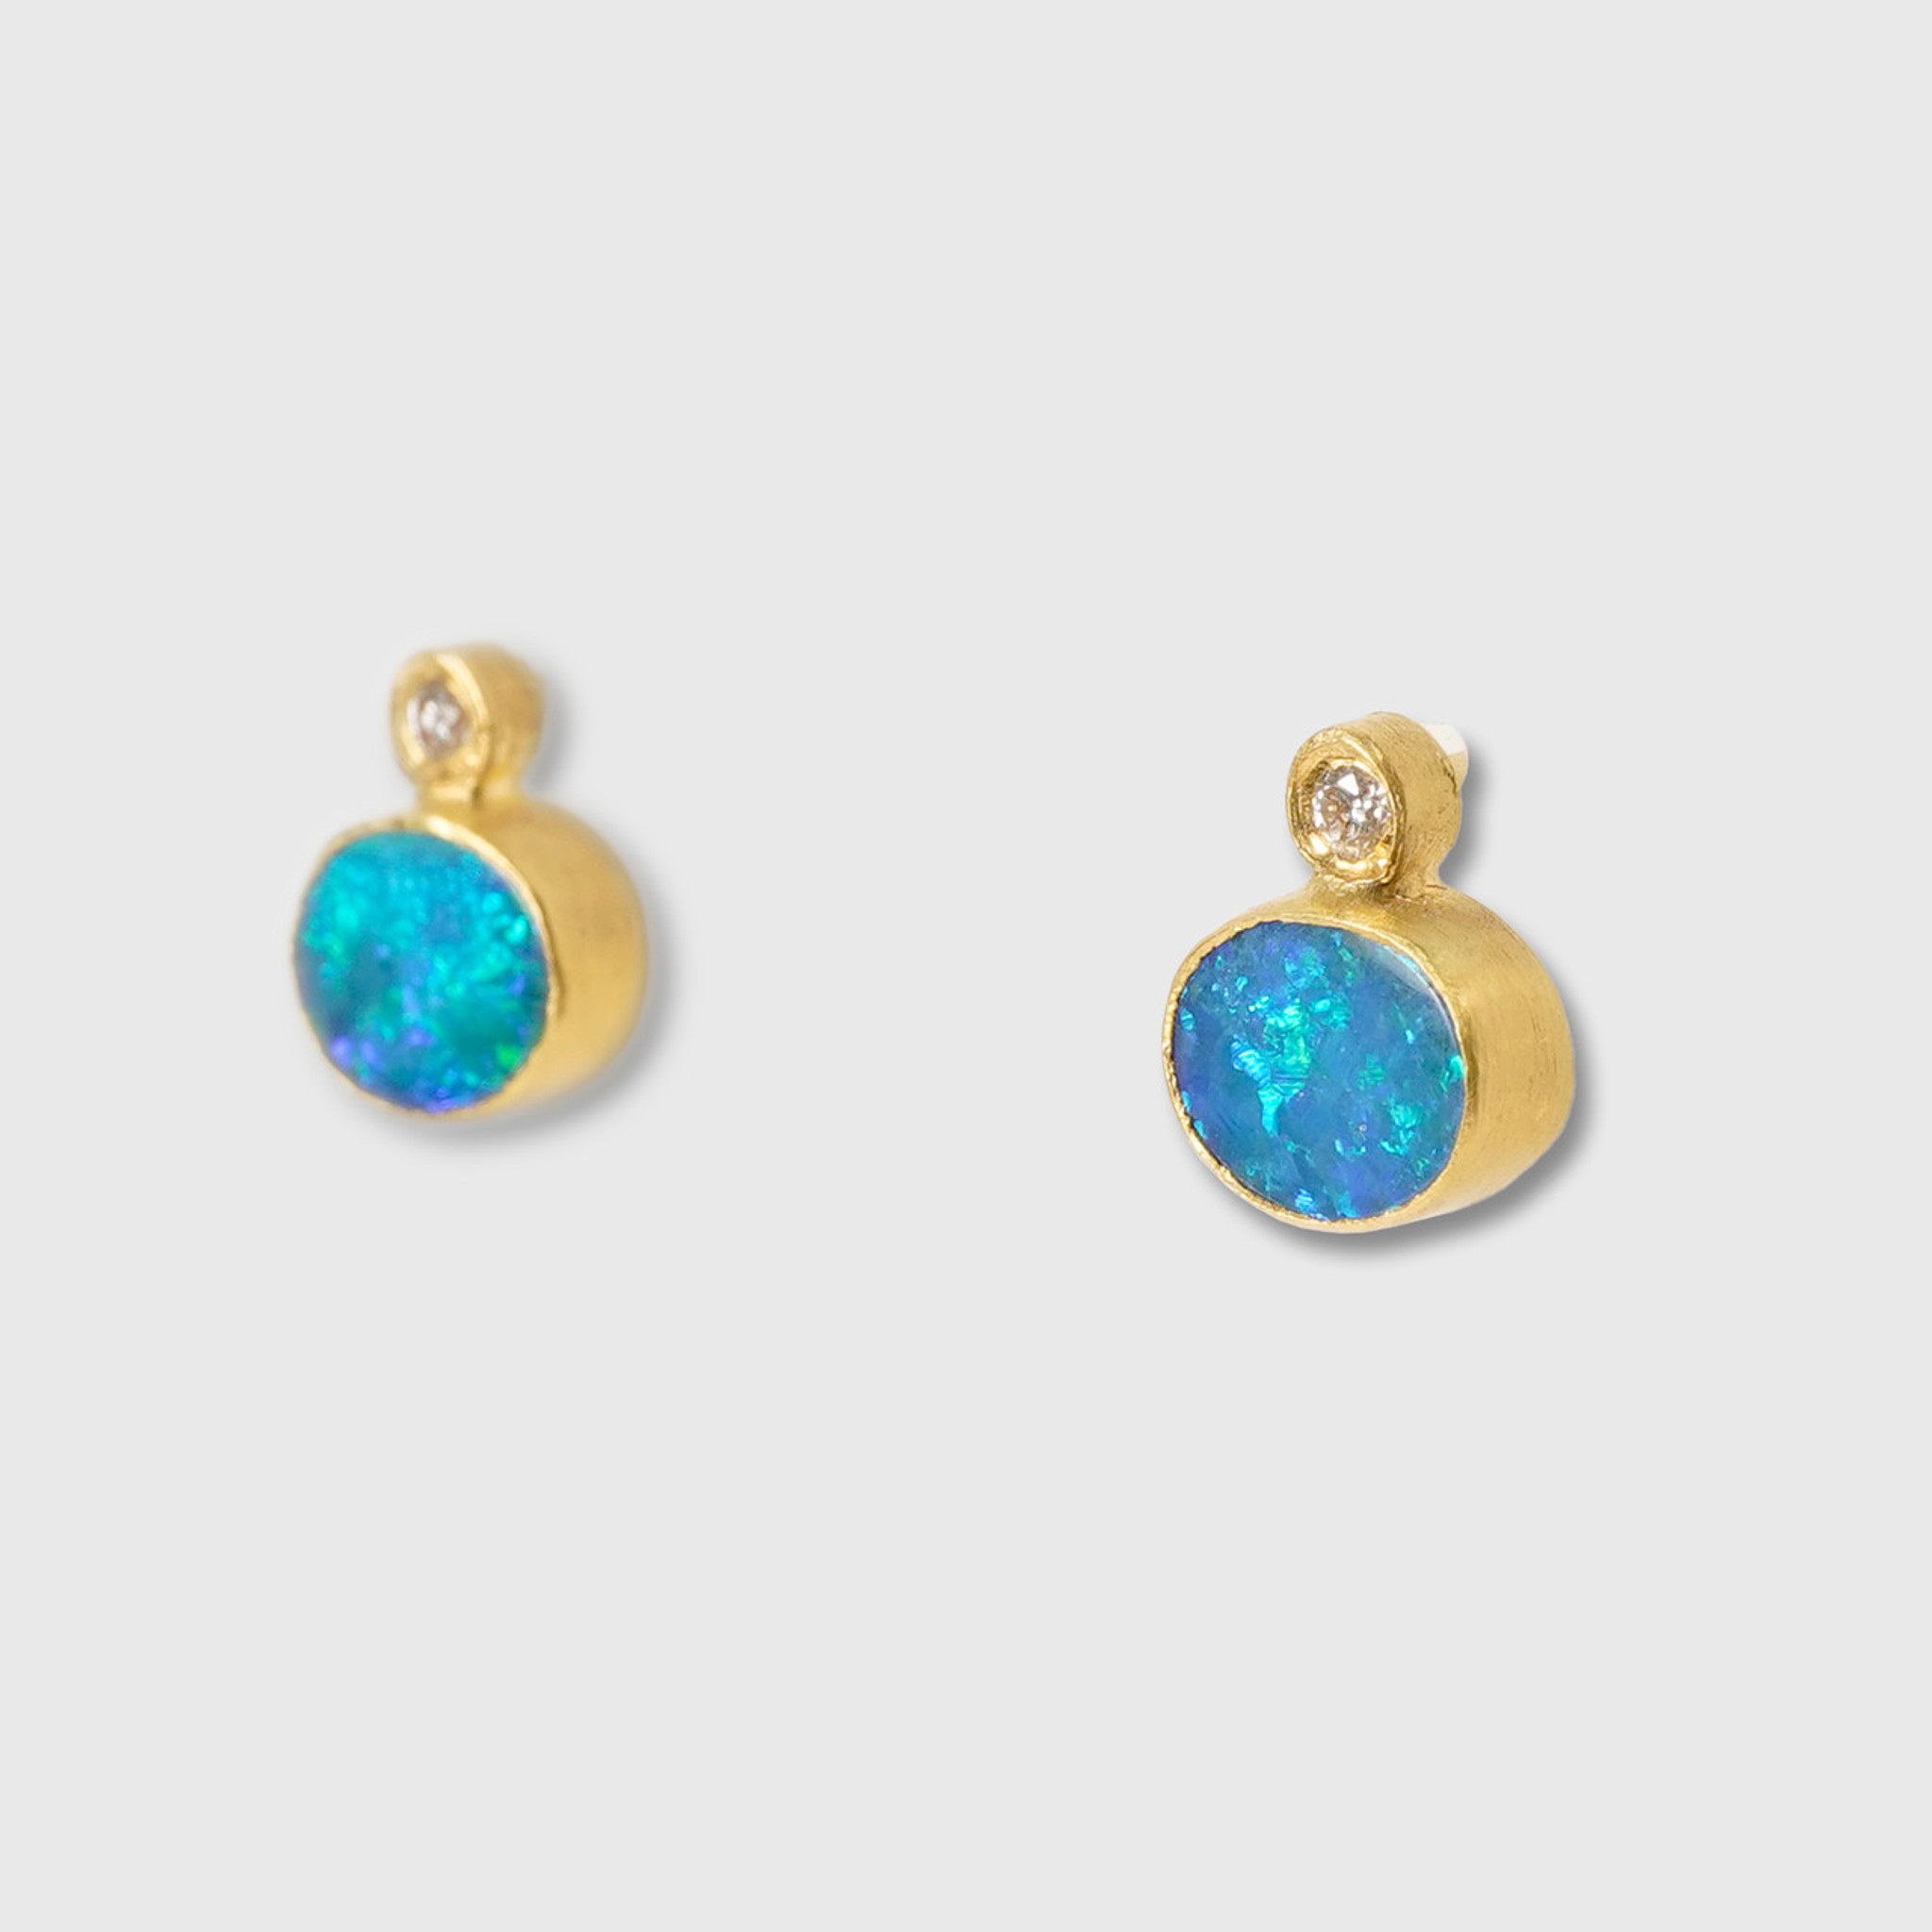 Kurtulan Oval Australian Opal and Diamond Earrings, Solid 24K Gold 